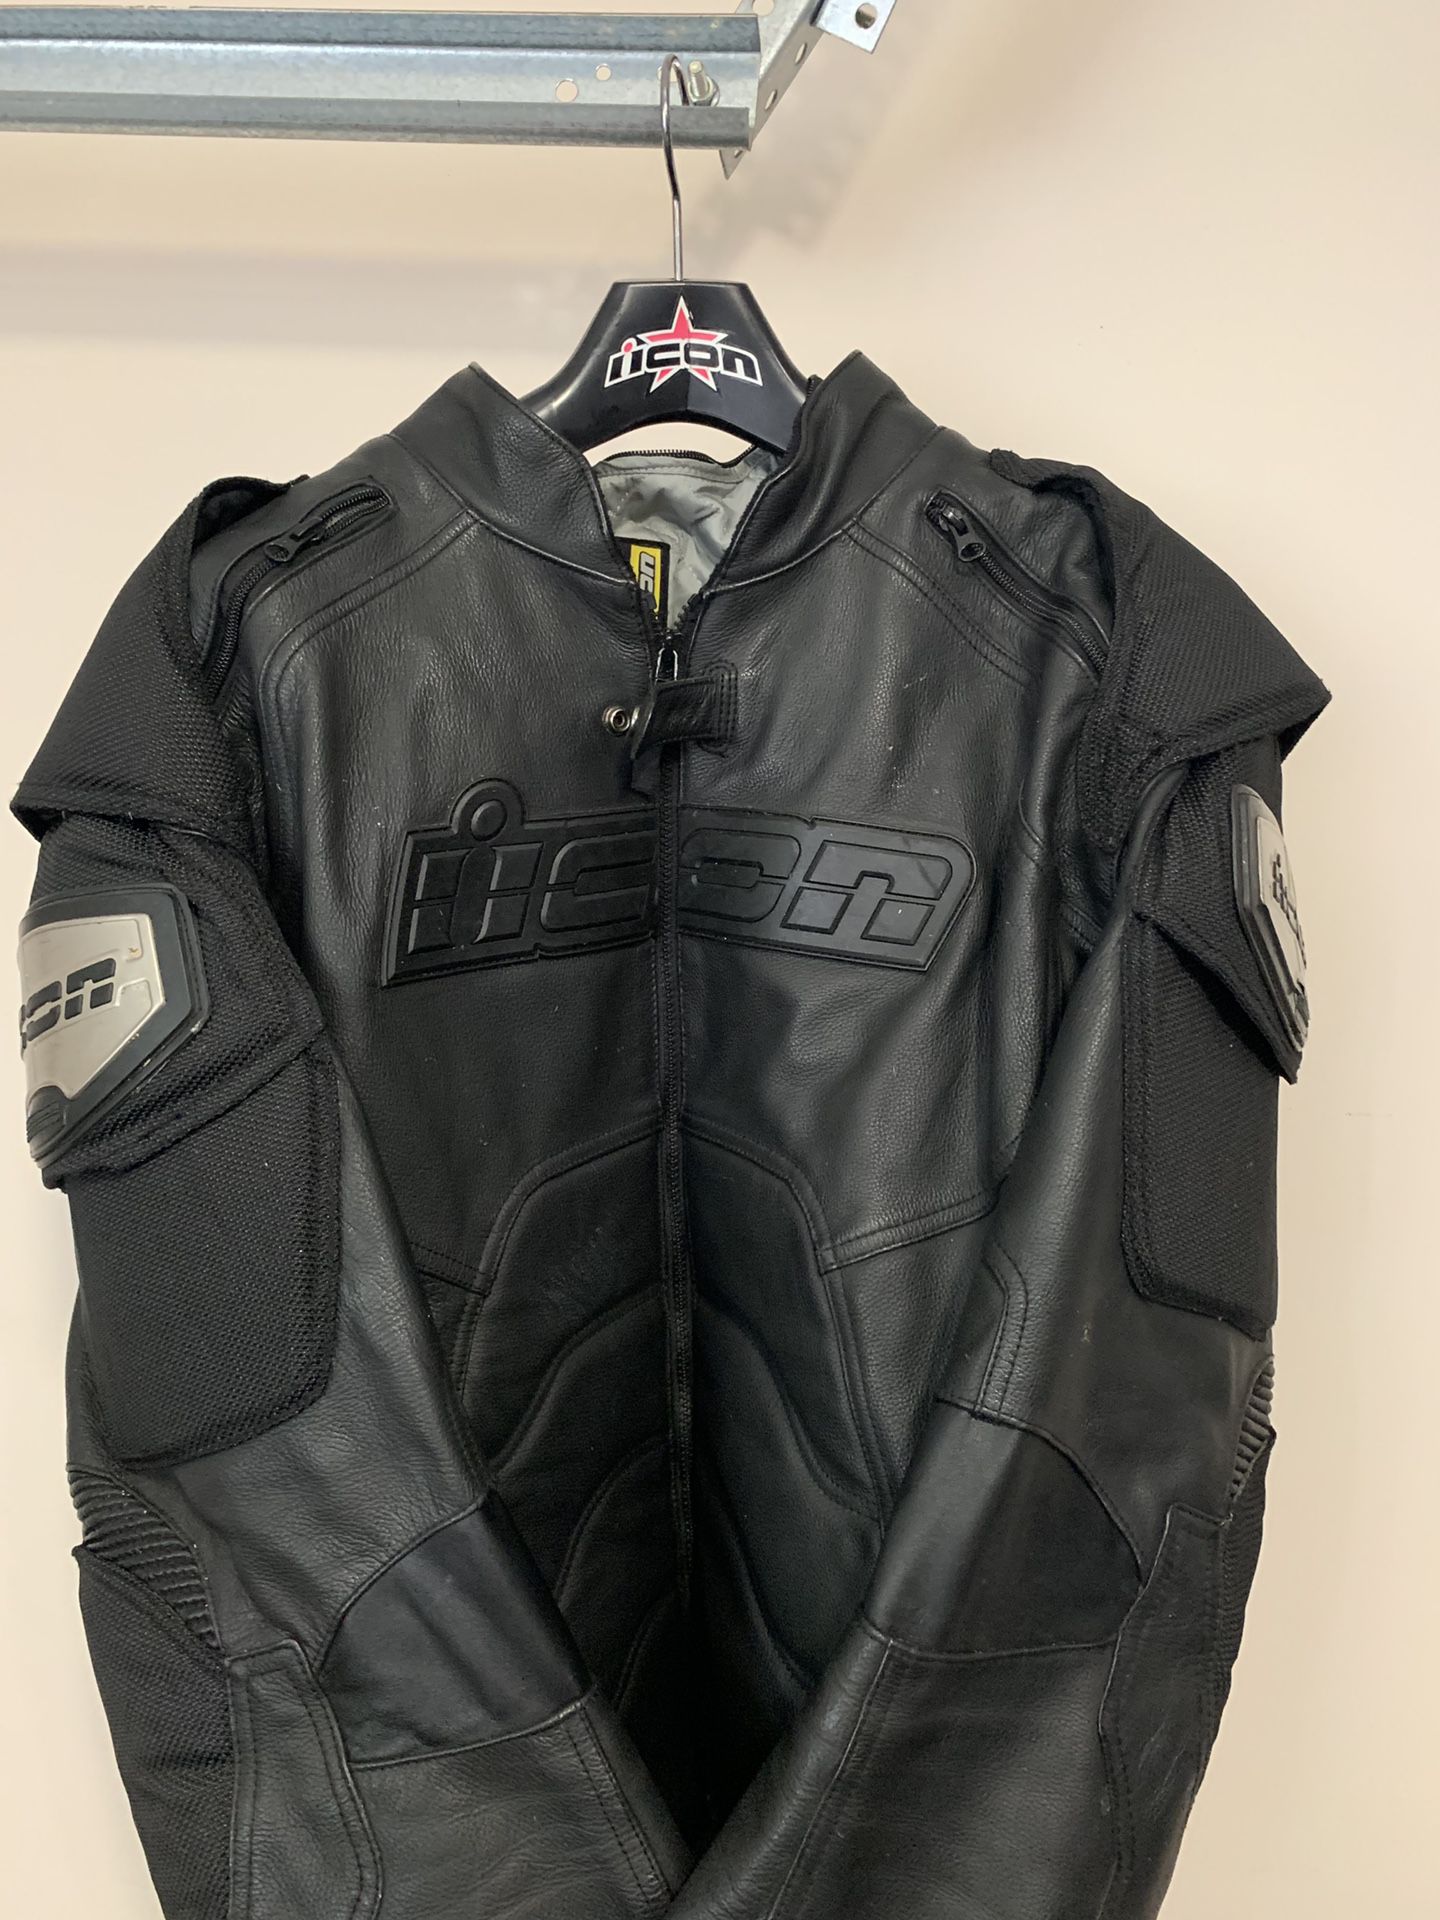 IICON leather jacket with titanium inserts (RARE)!!